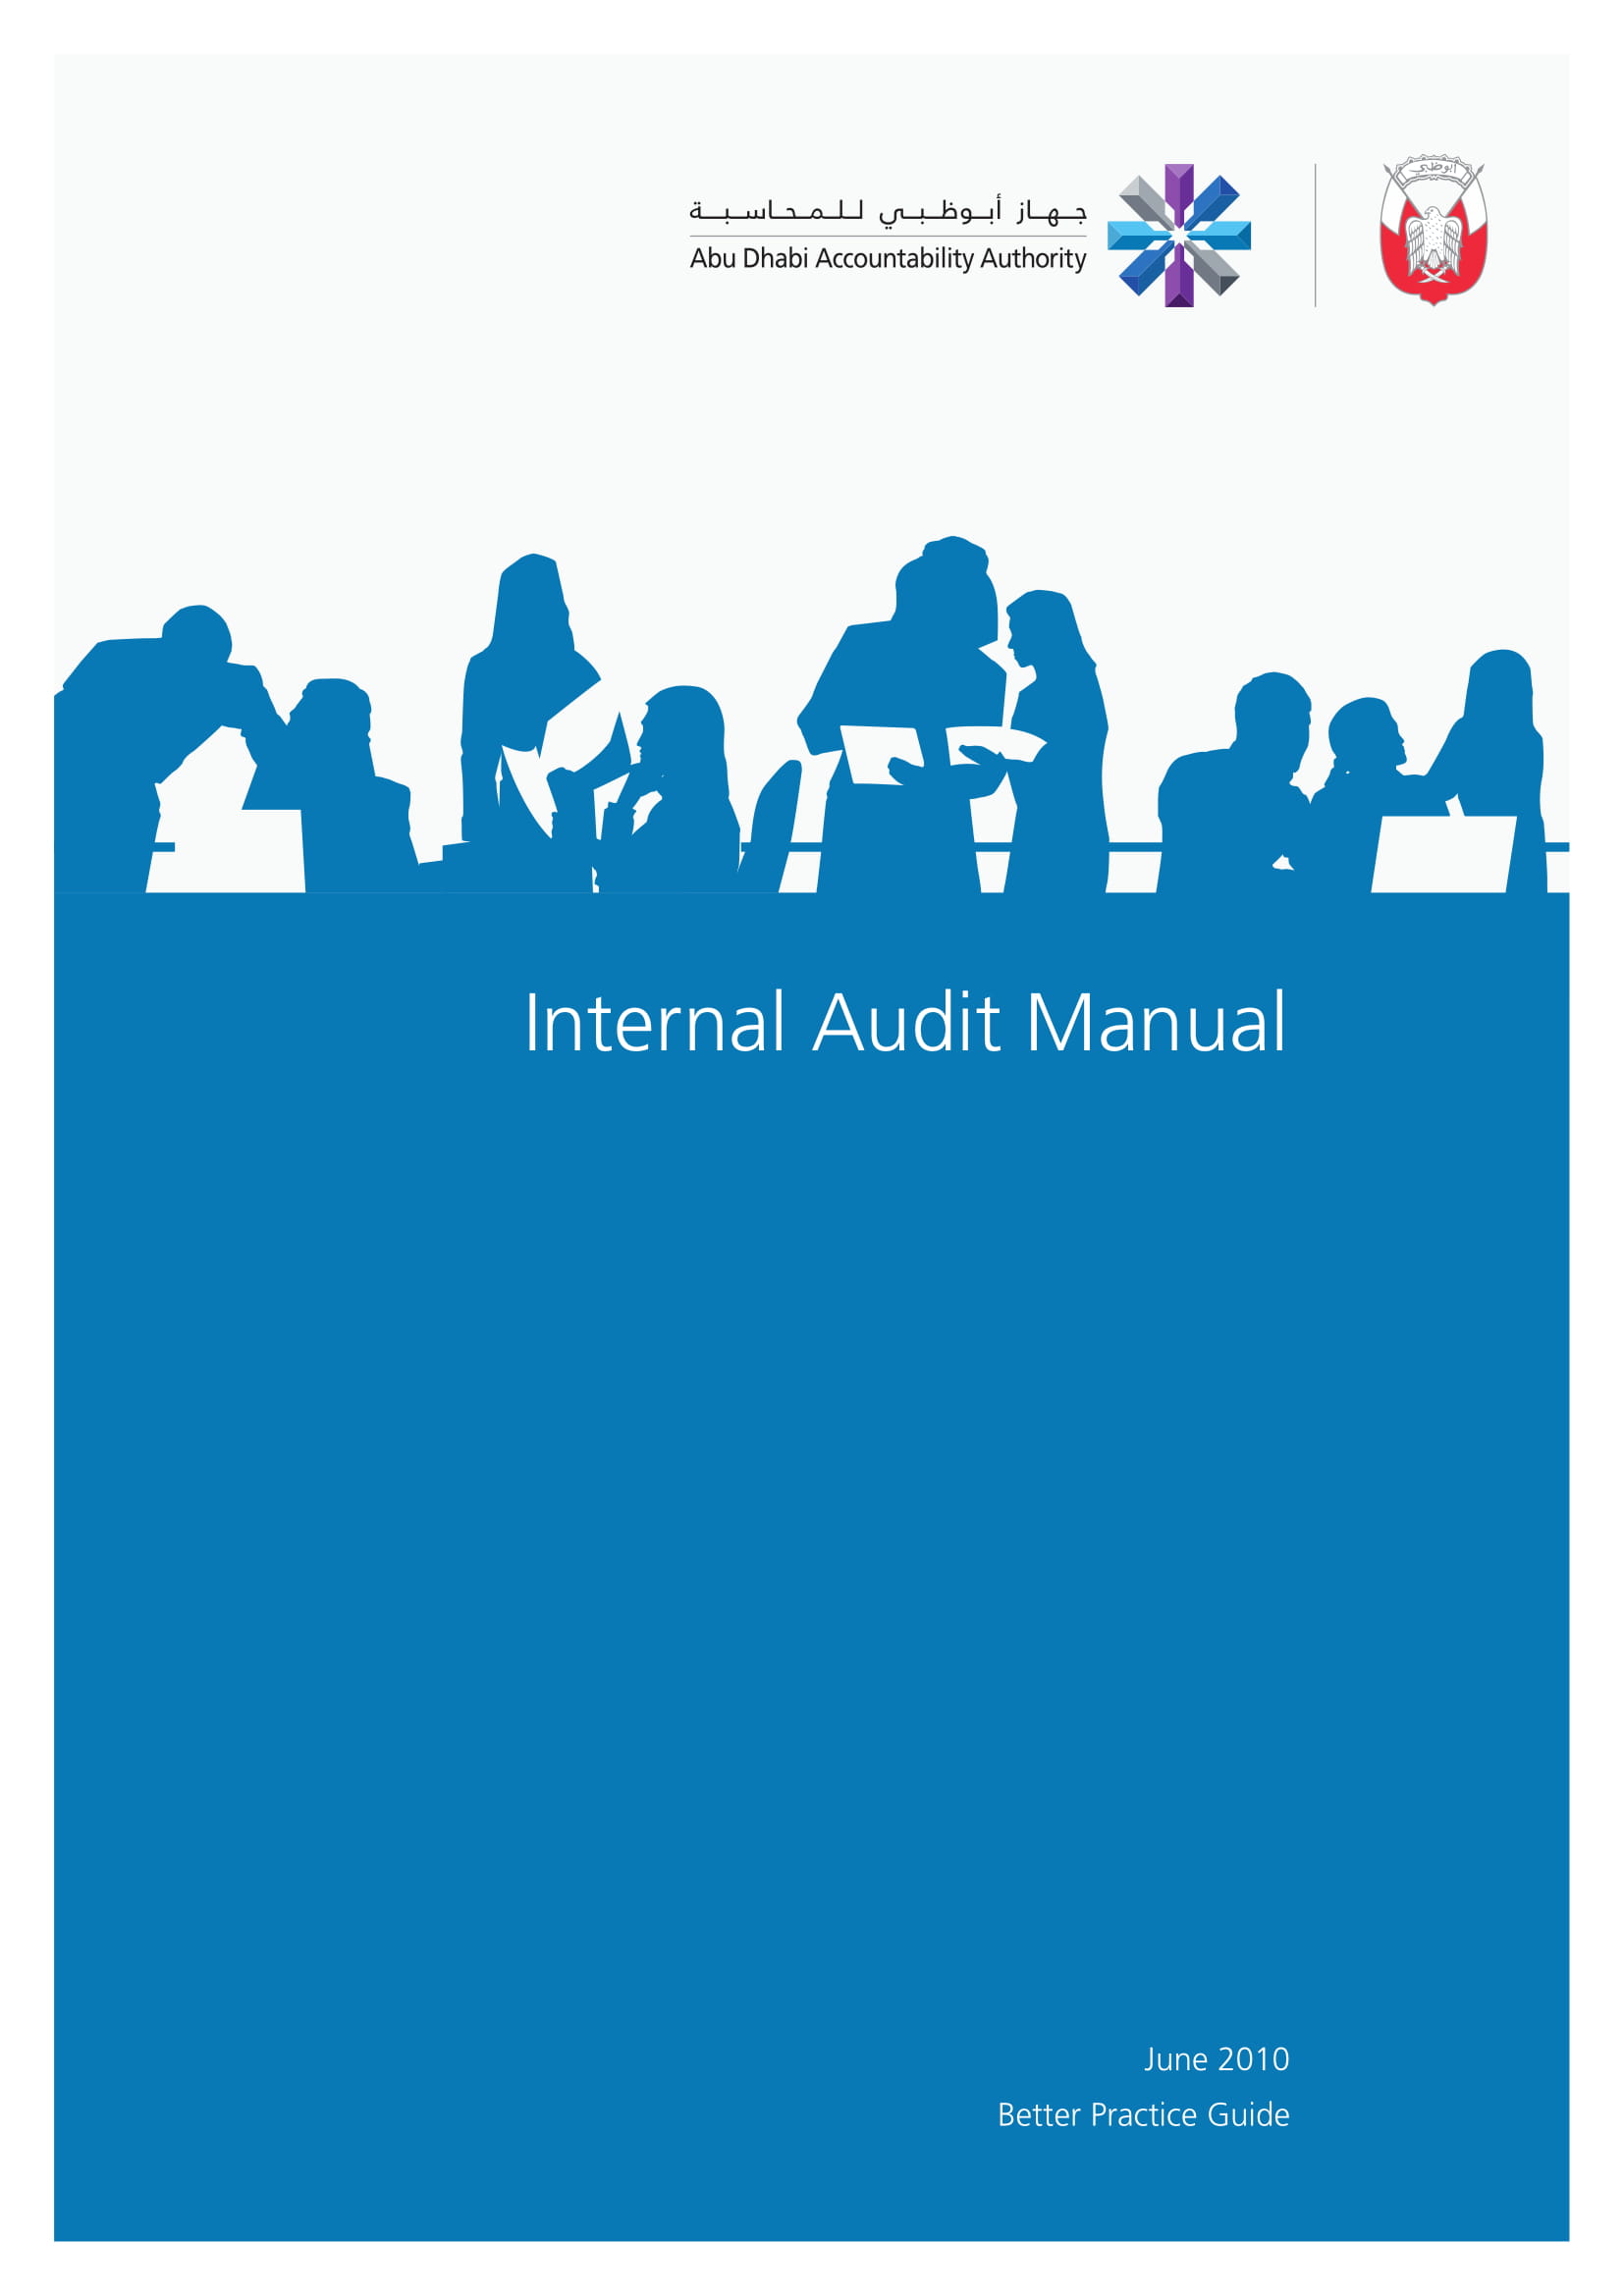 fdic internal audit manual